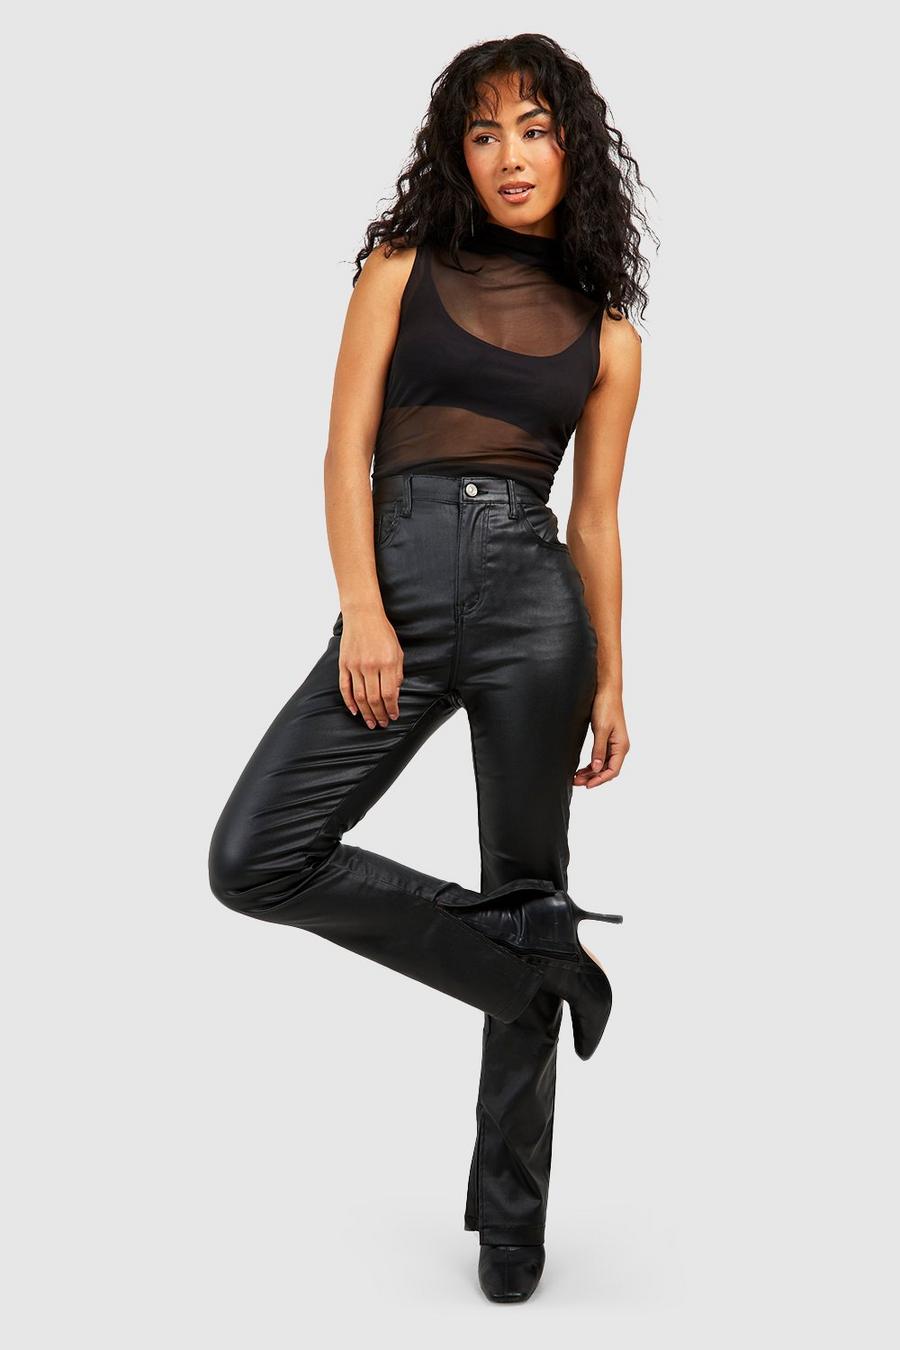 Boohoo Black Acid Wash Skinny Jeans Women's Size 16 New - beyond